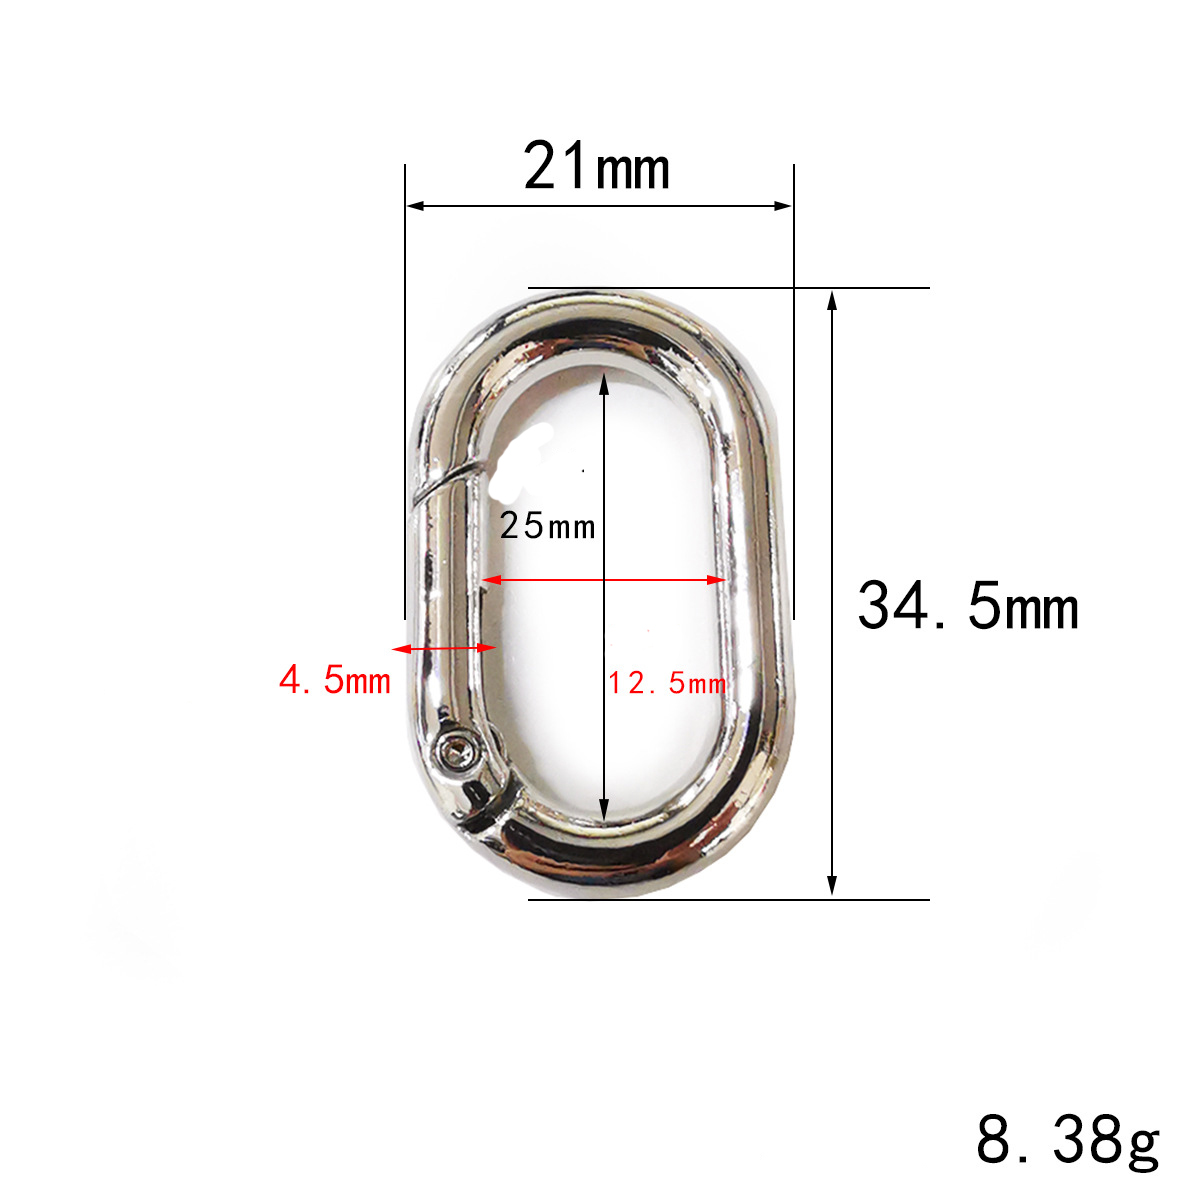 2:25mm inside diameter oval spring buckle